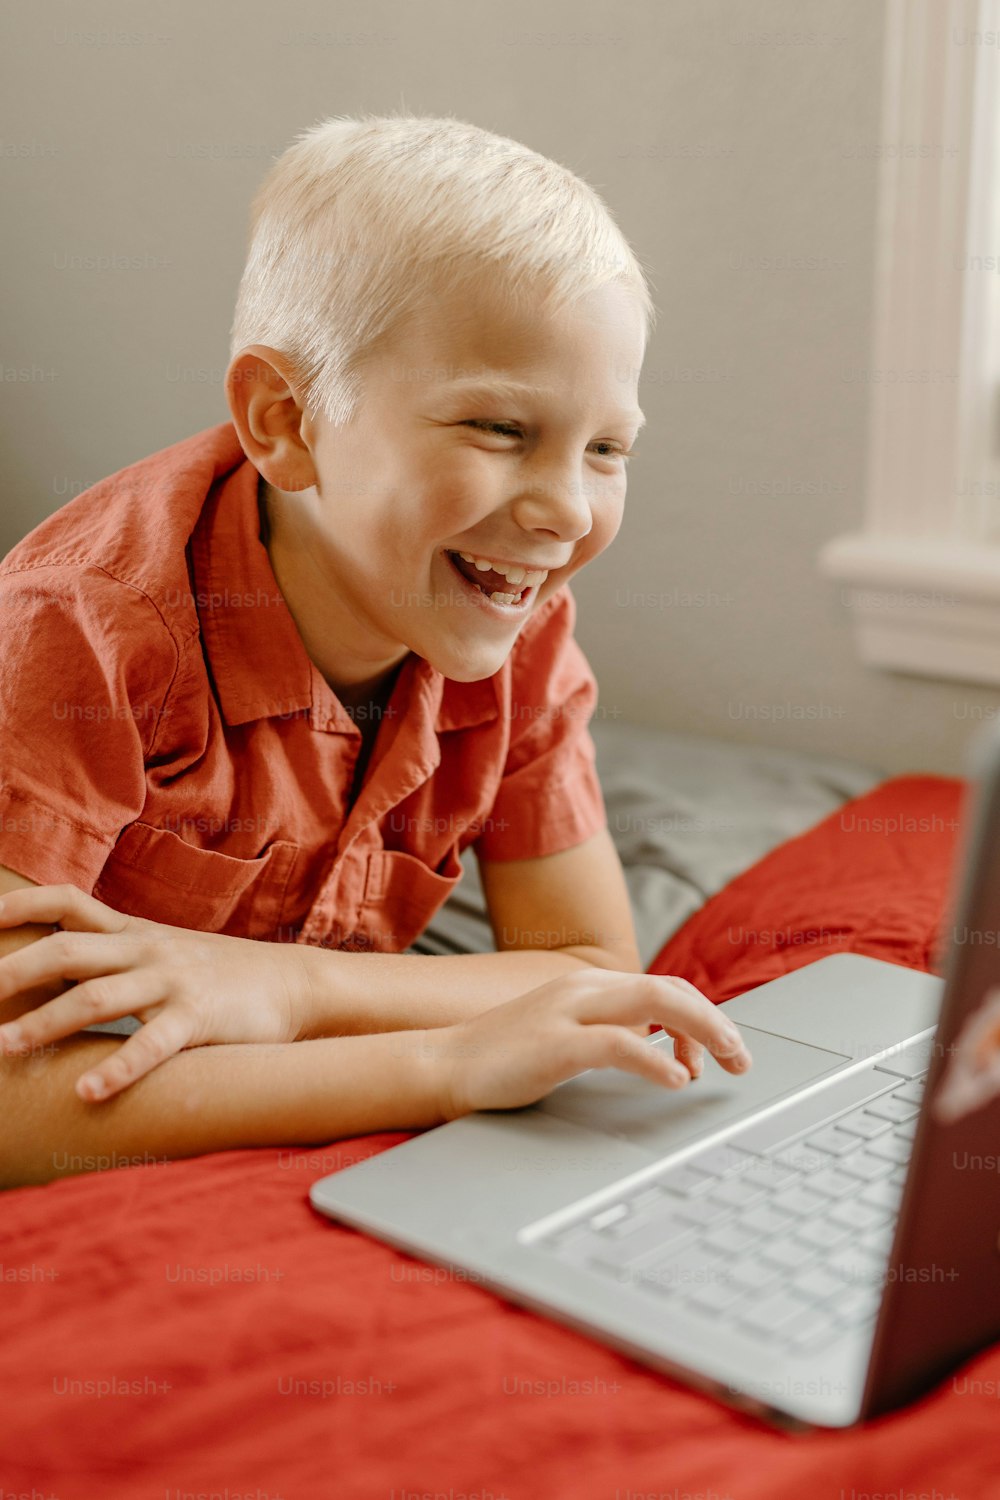 Un jeune garçon sourit en regardant un ordinateur portable